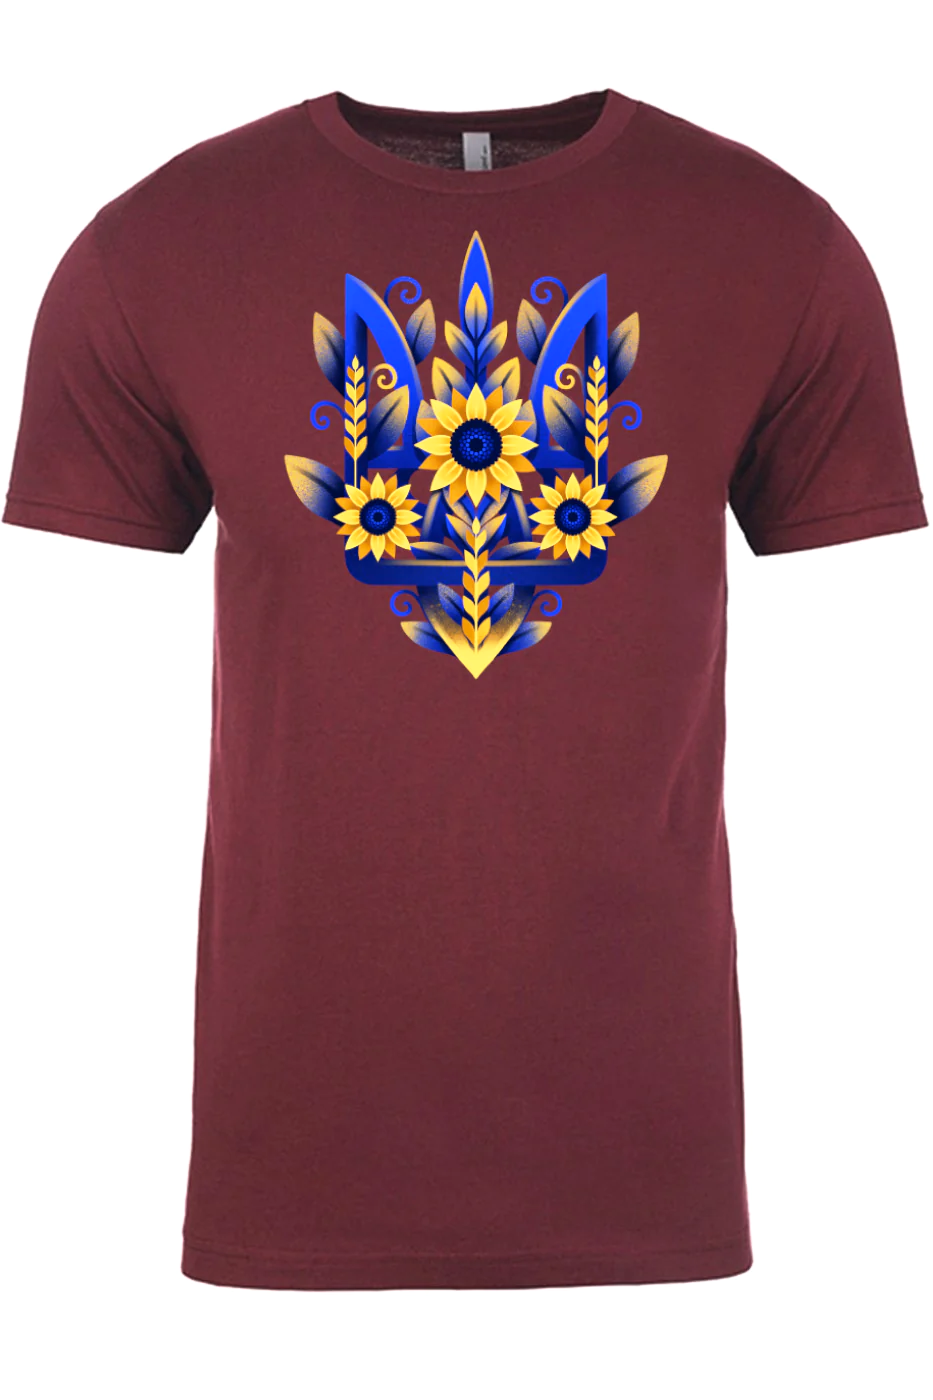 Adult t-shirt "Sunflower Tryzub"